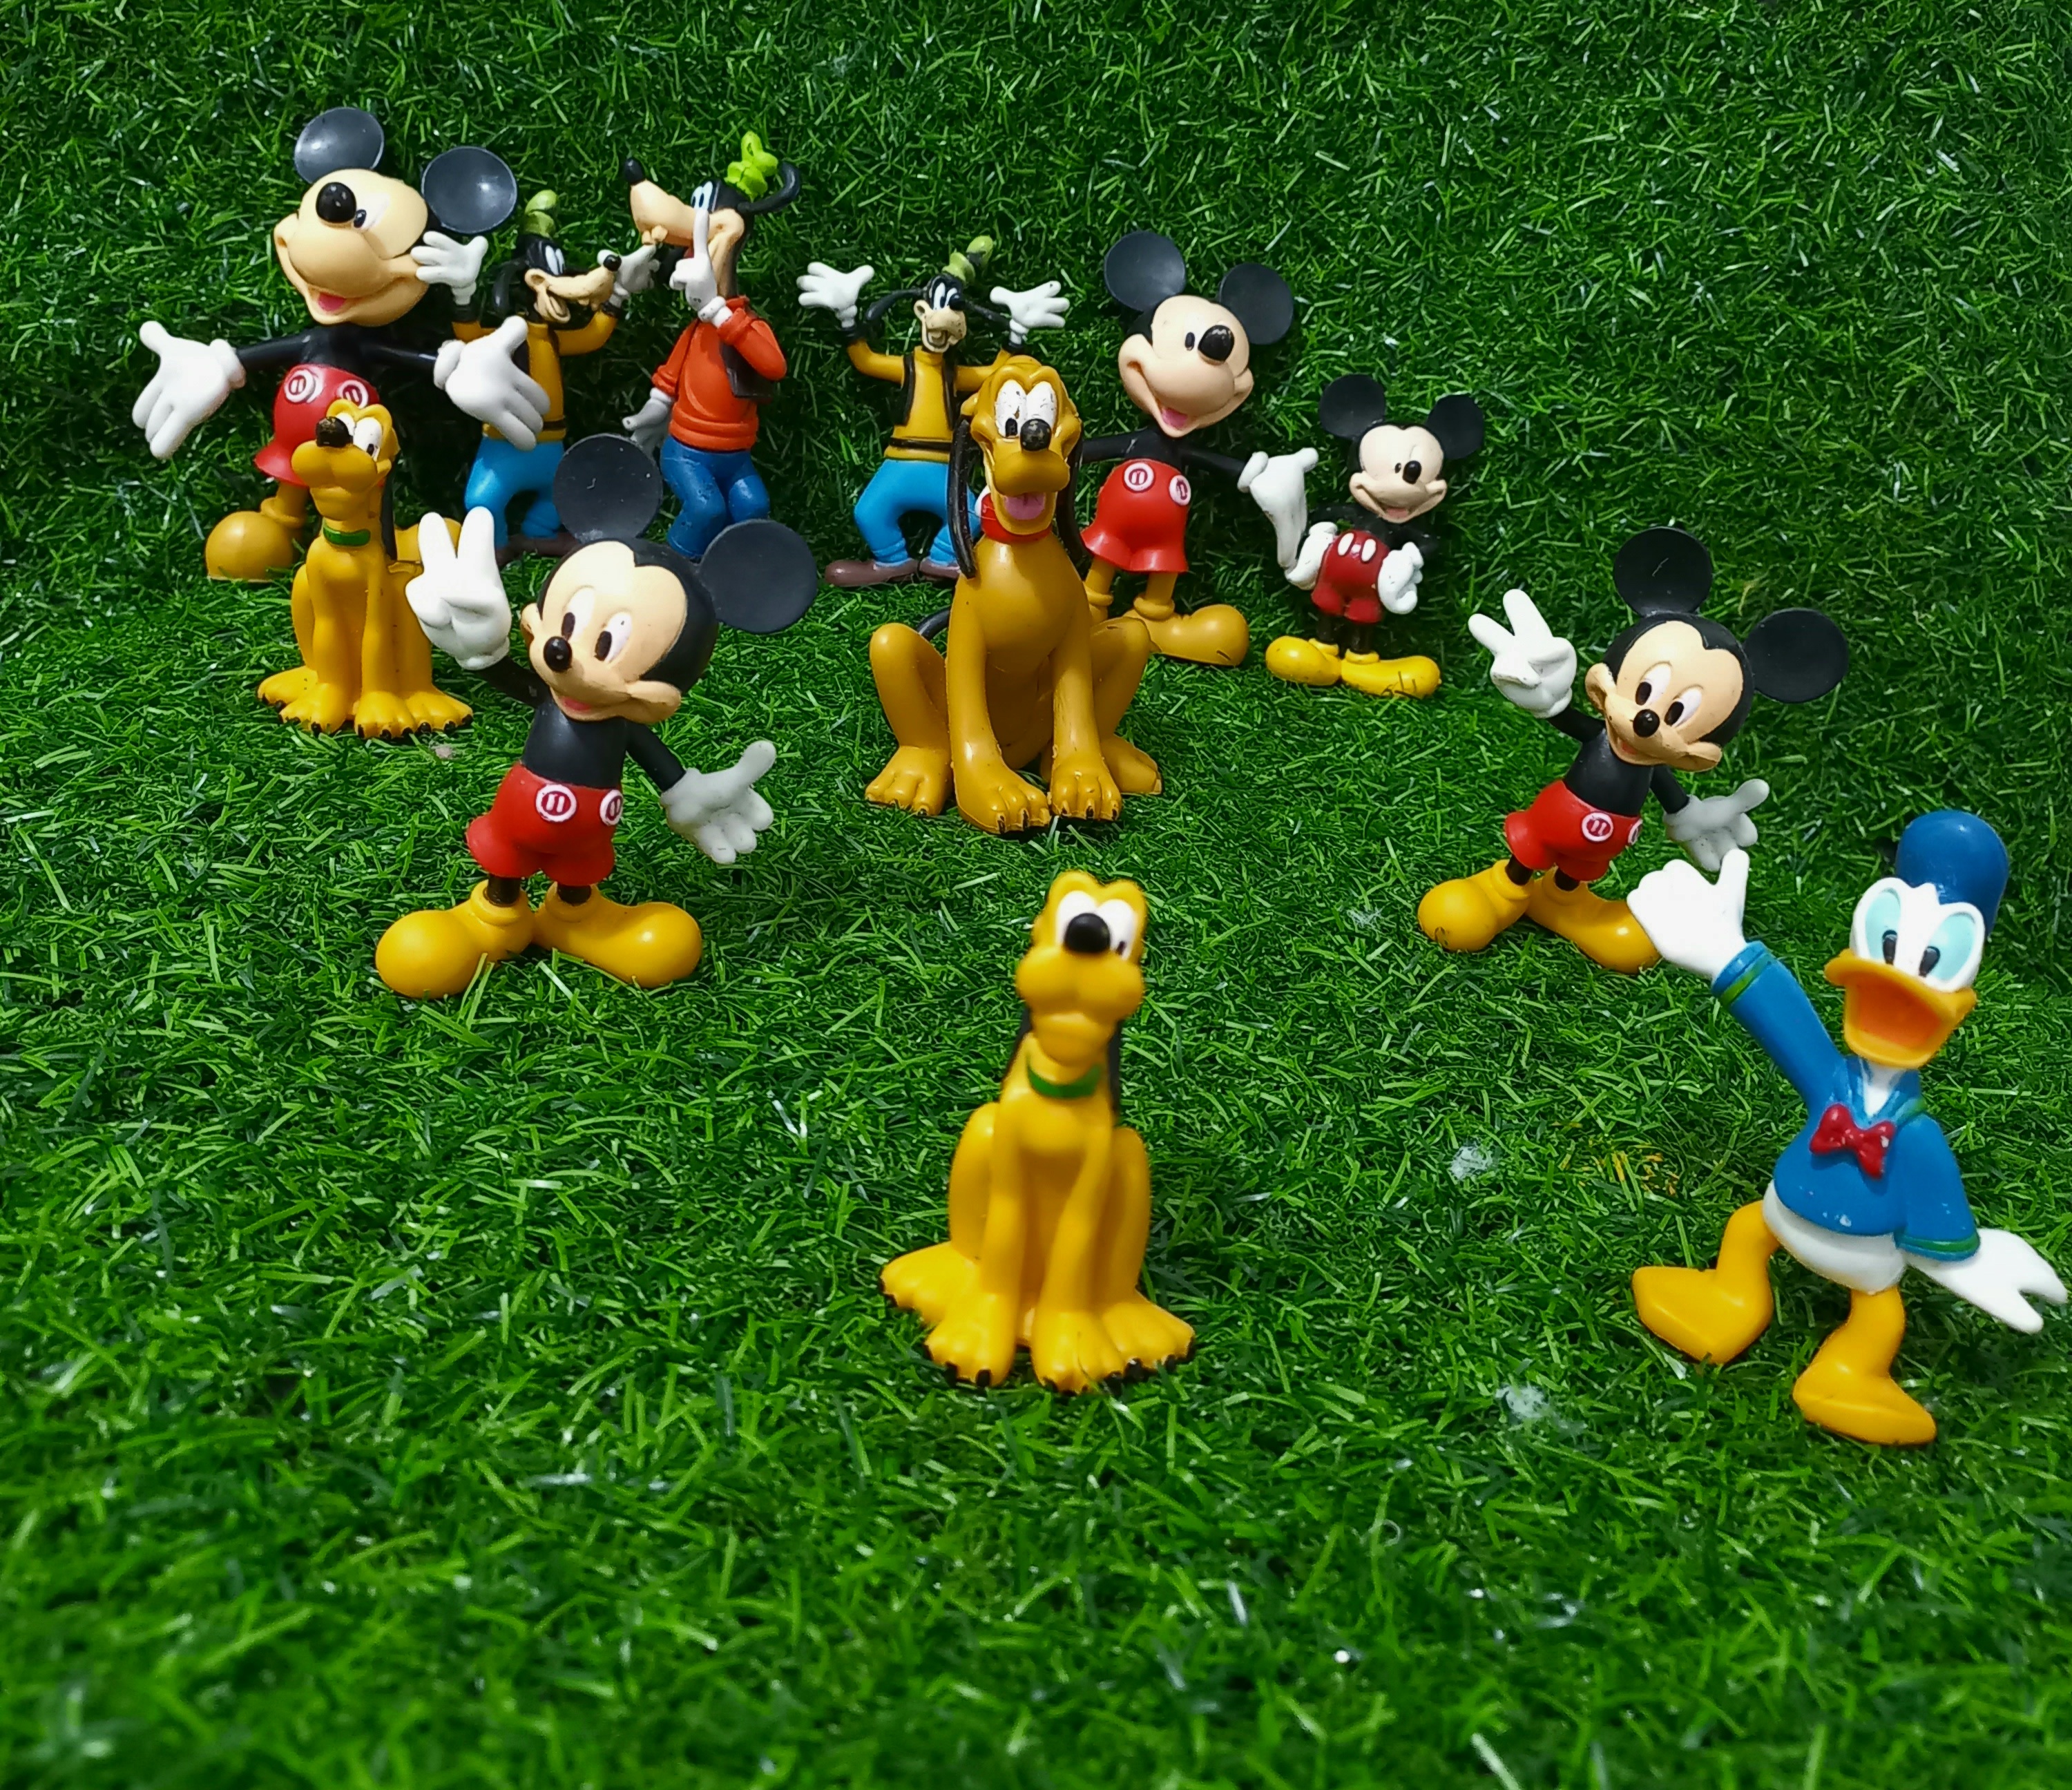 Micky, Donald duck etc